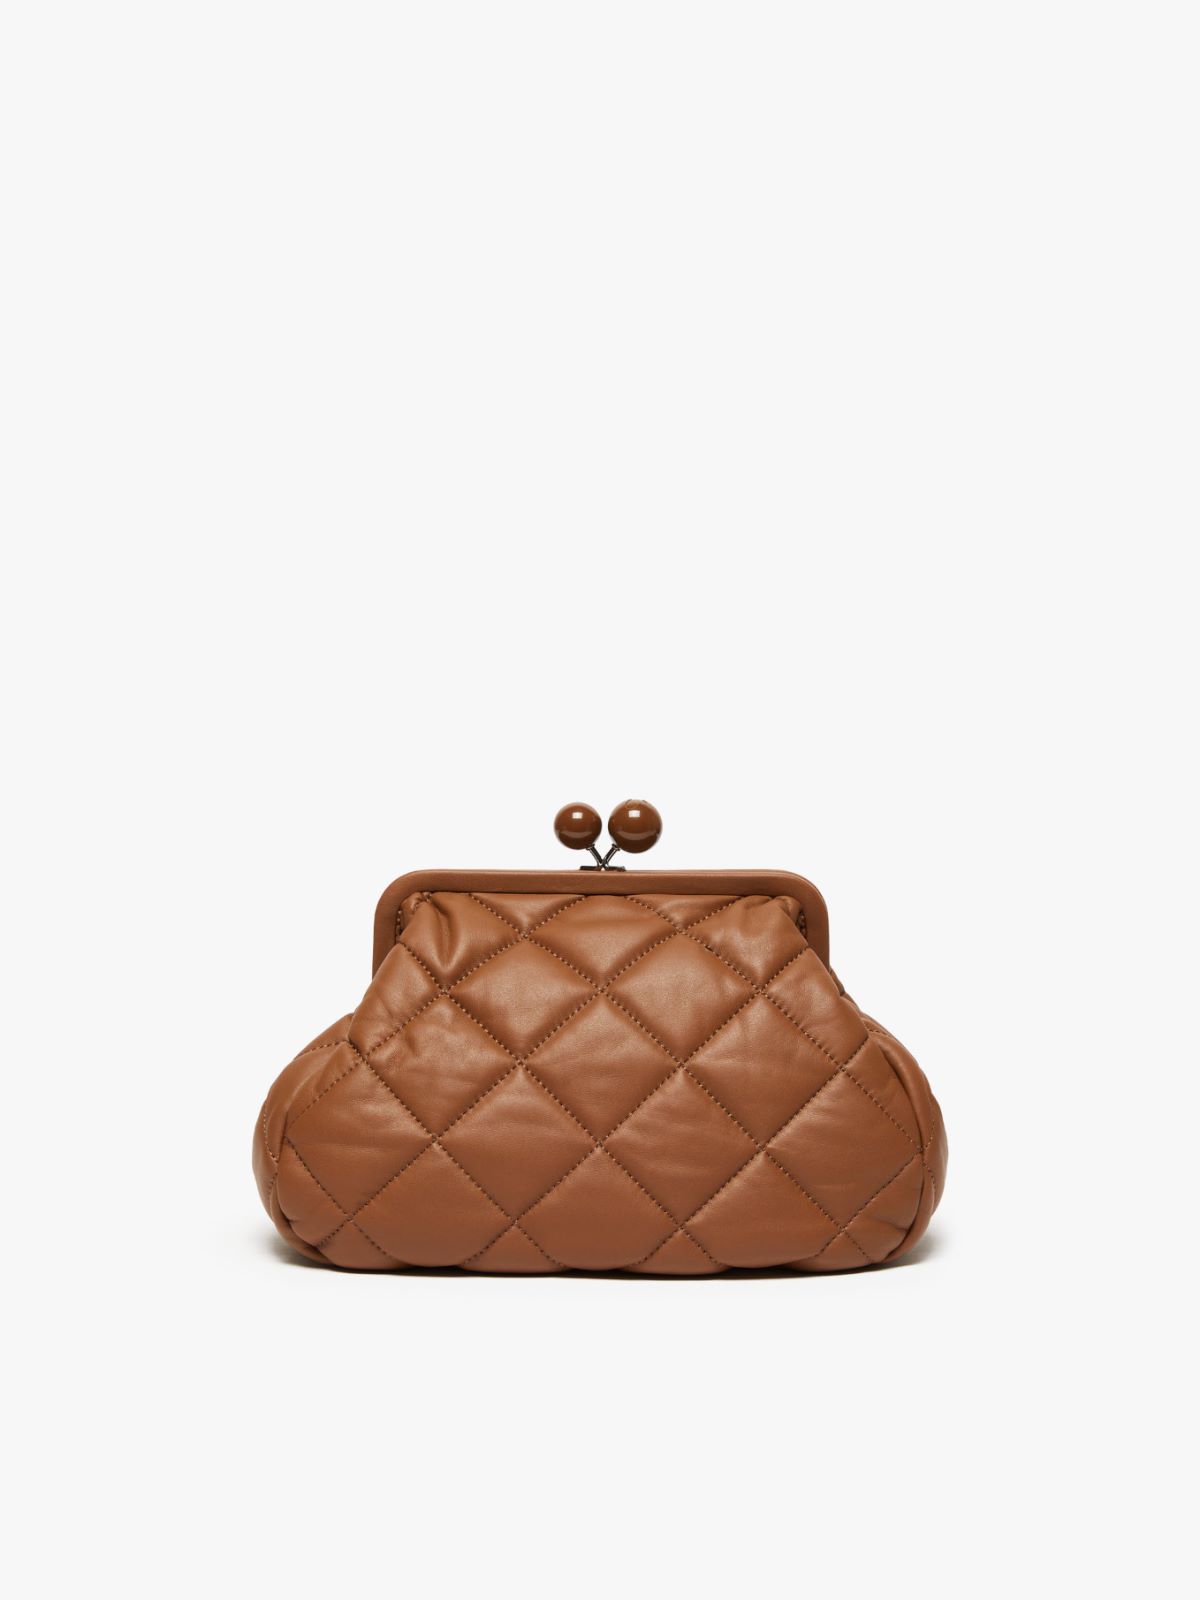 Medium Pasticcino Bag in nappa leather - BROWN - Weekend Max Mara - 3